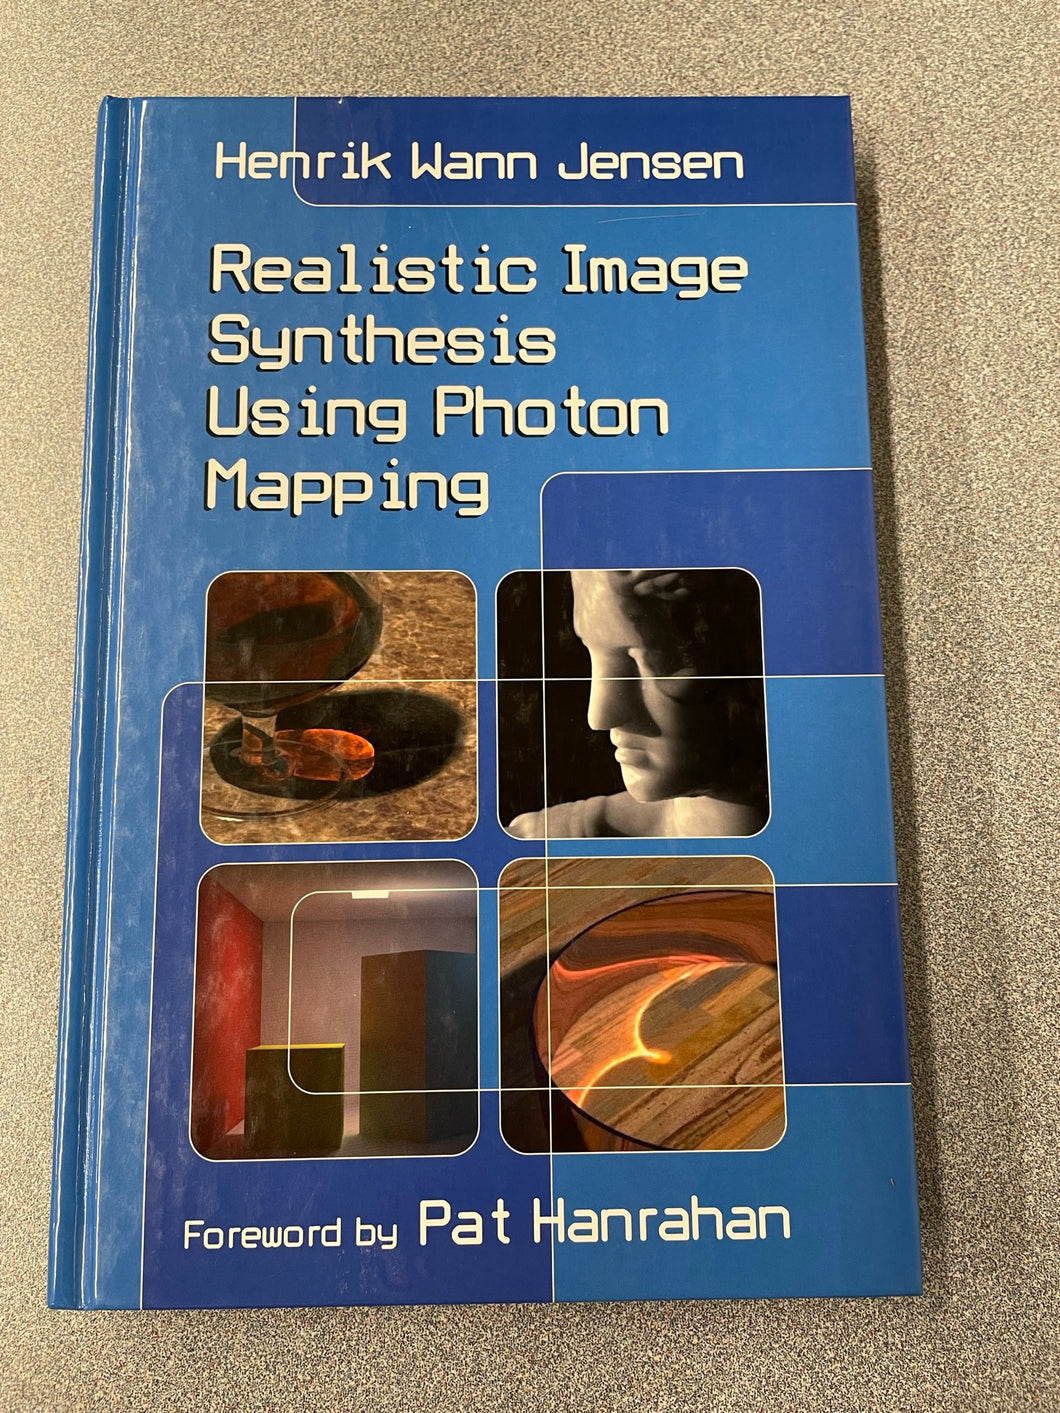 Realistic Image Synthesis Using Photon Mapping, Jensen, Henrik Wann [2001] SN 4/23